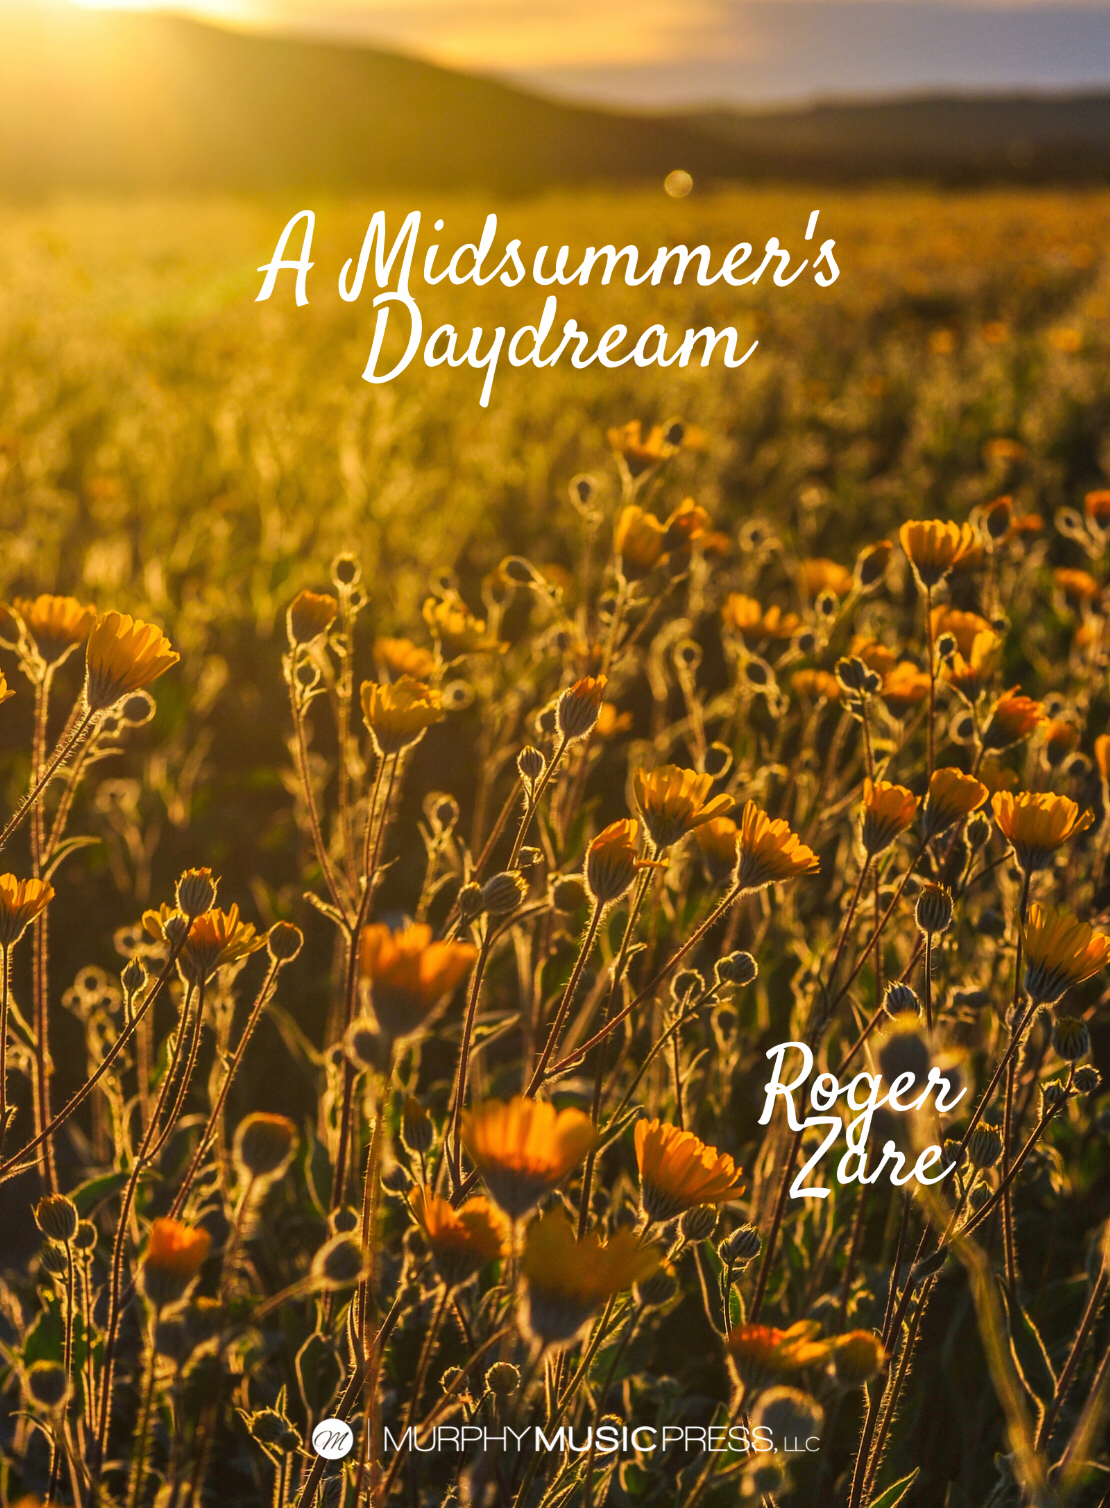 A Midsummer's Daydream by Roger Zare